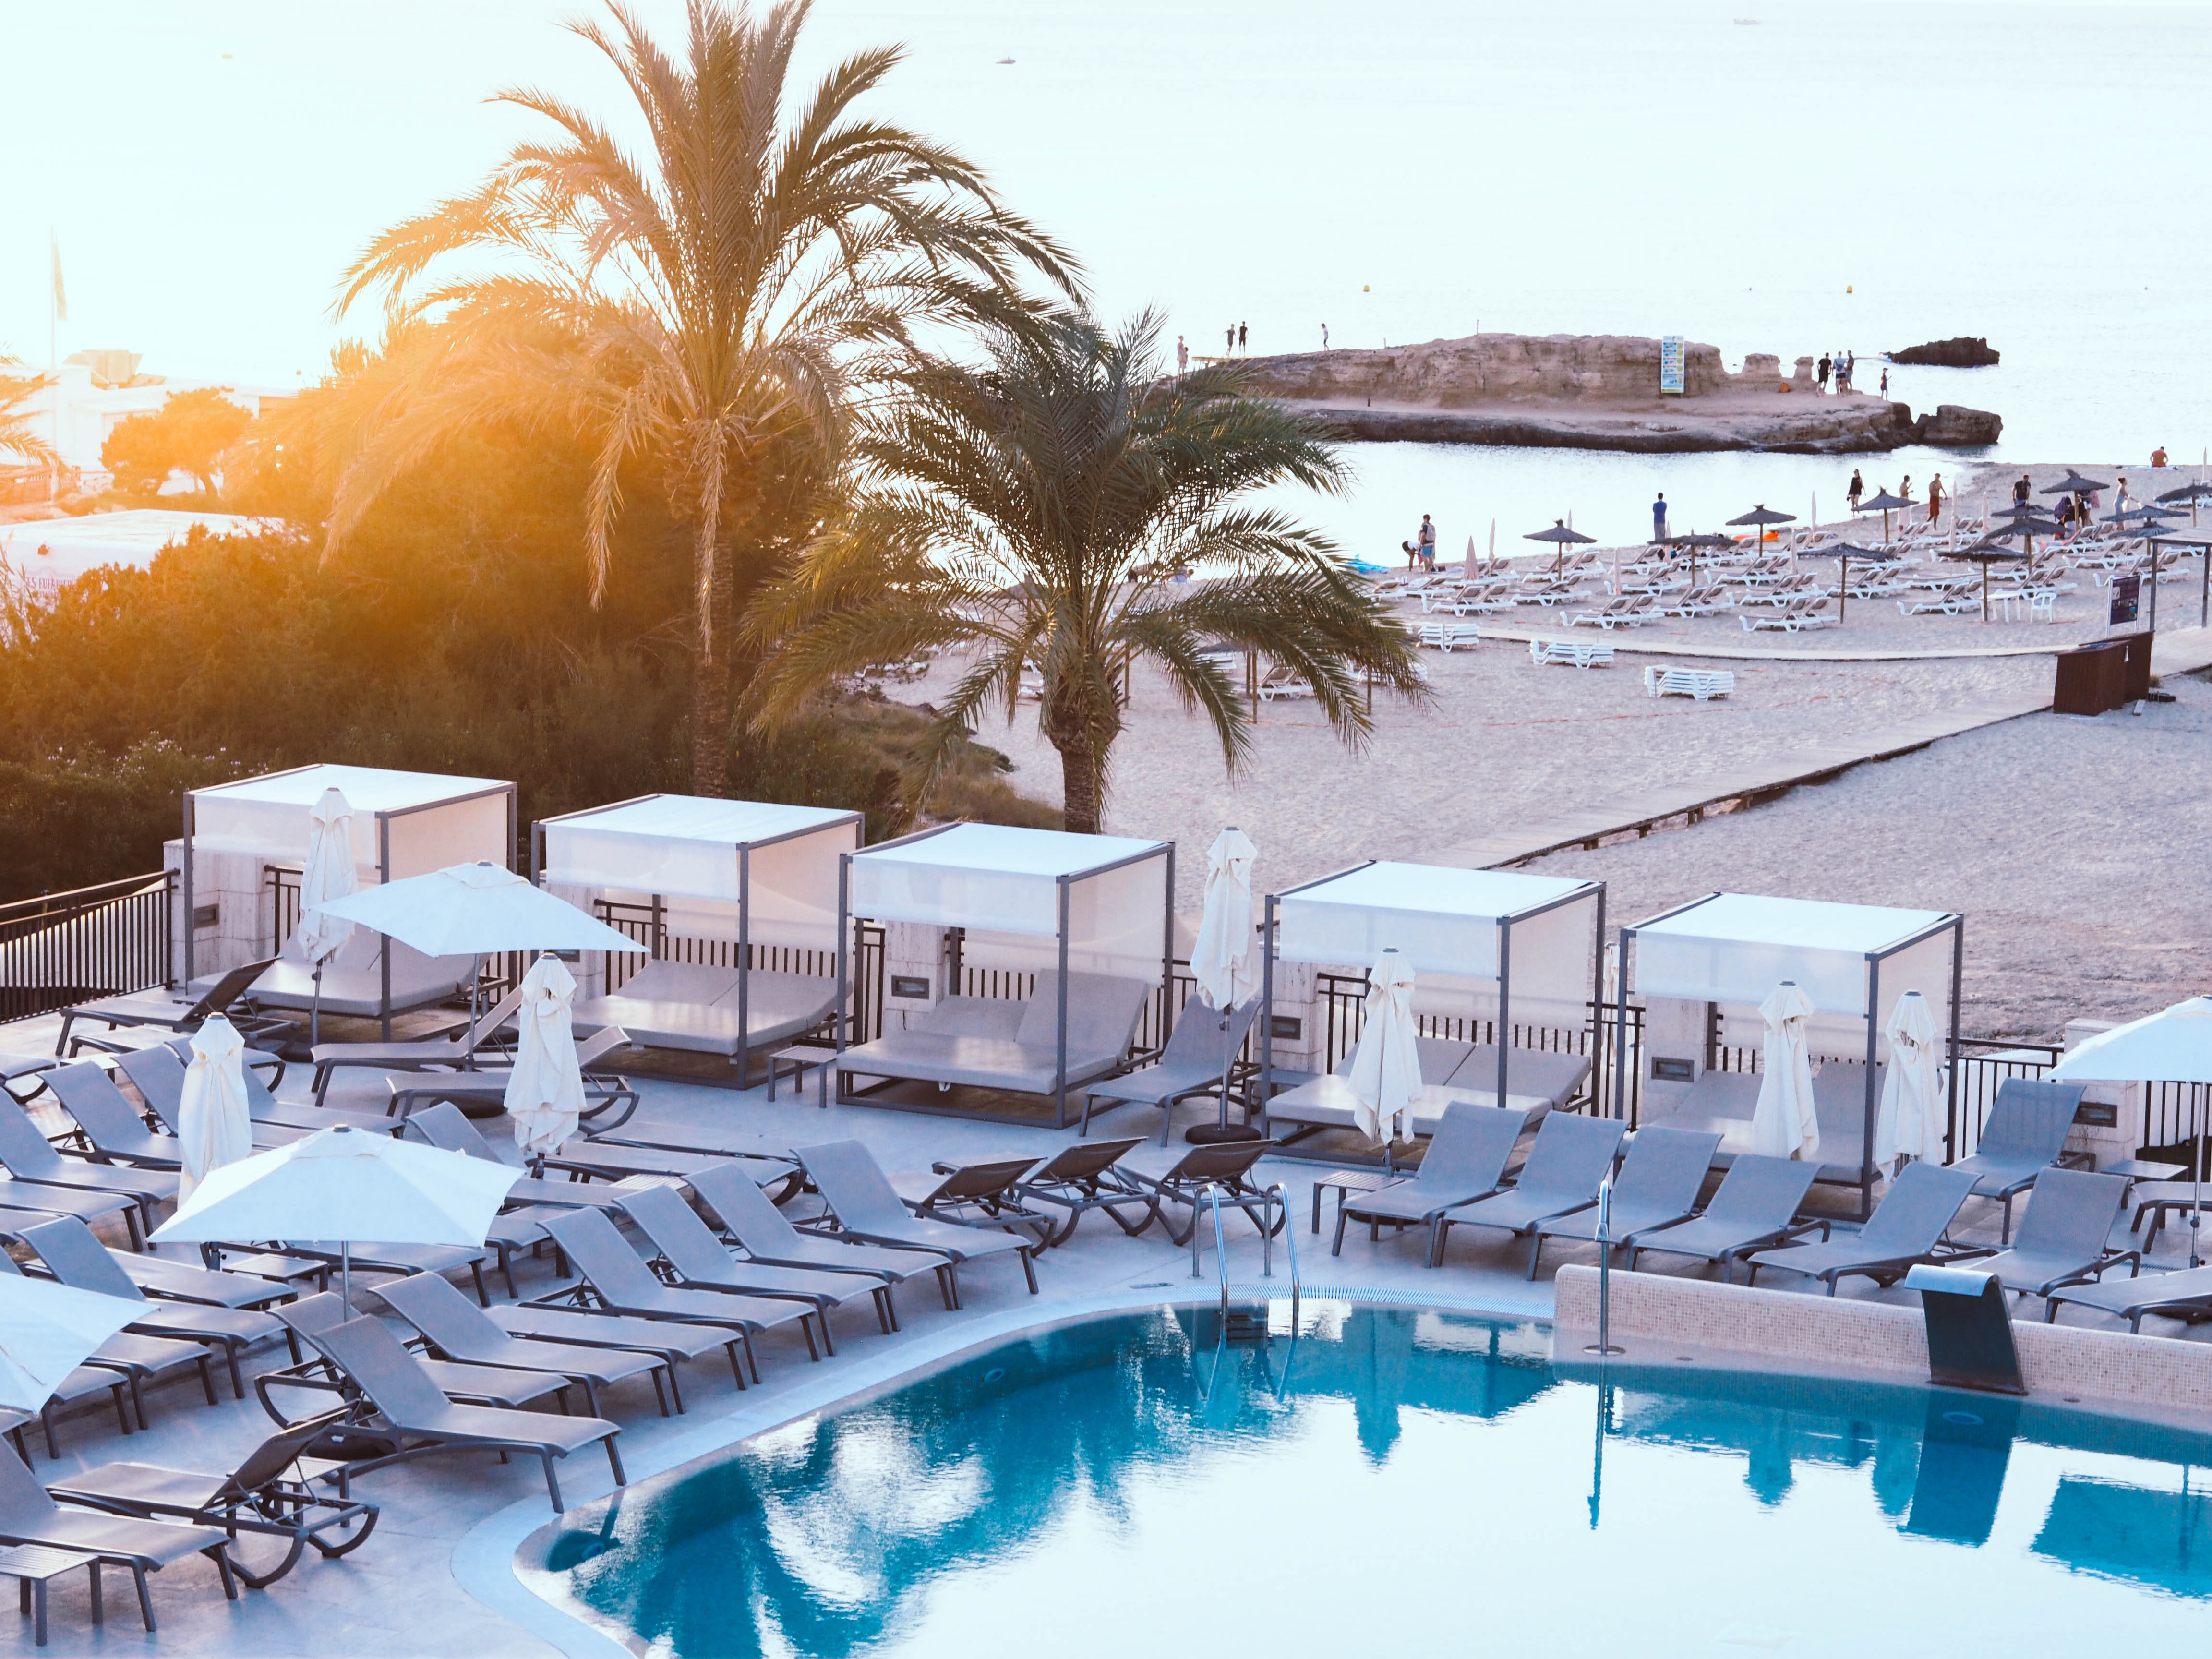 Tui Sensatori Resort Cala Tarida Ibiza, Erfahrungsbericht, Reiseblogger, Mamablogger, Blogger aus Nürnberg, Pazi